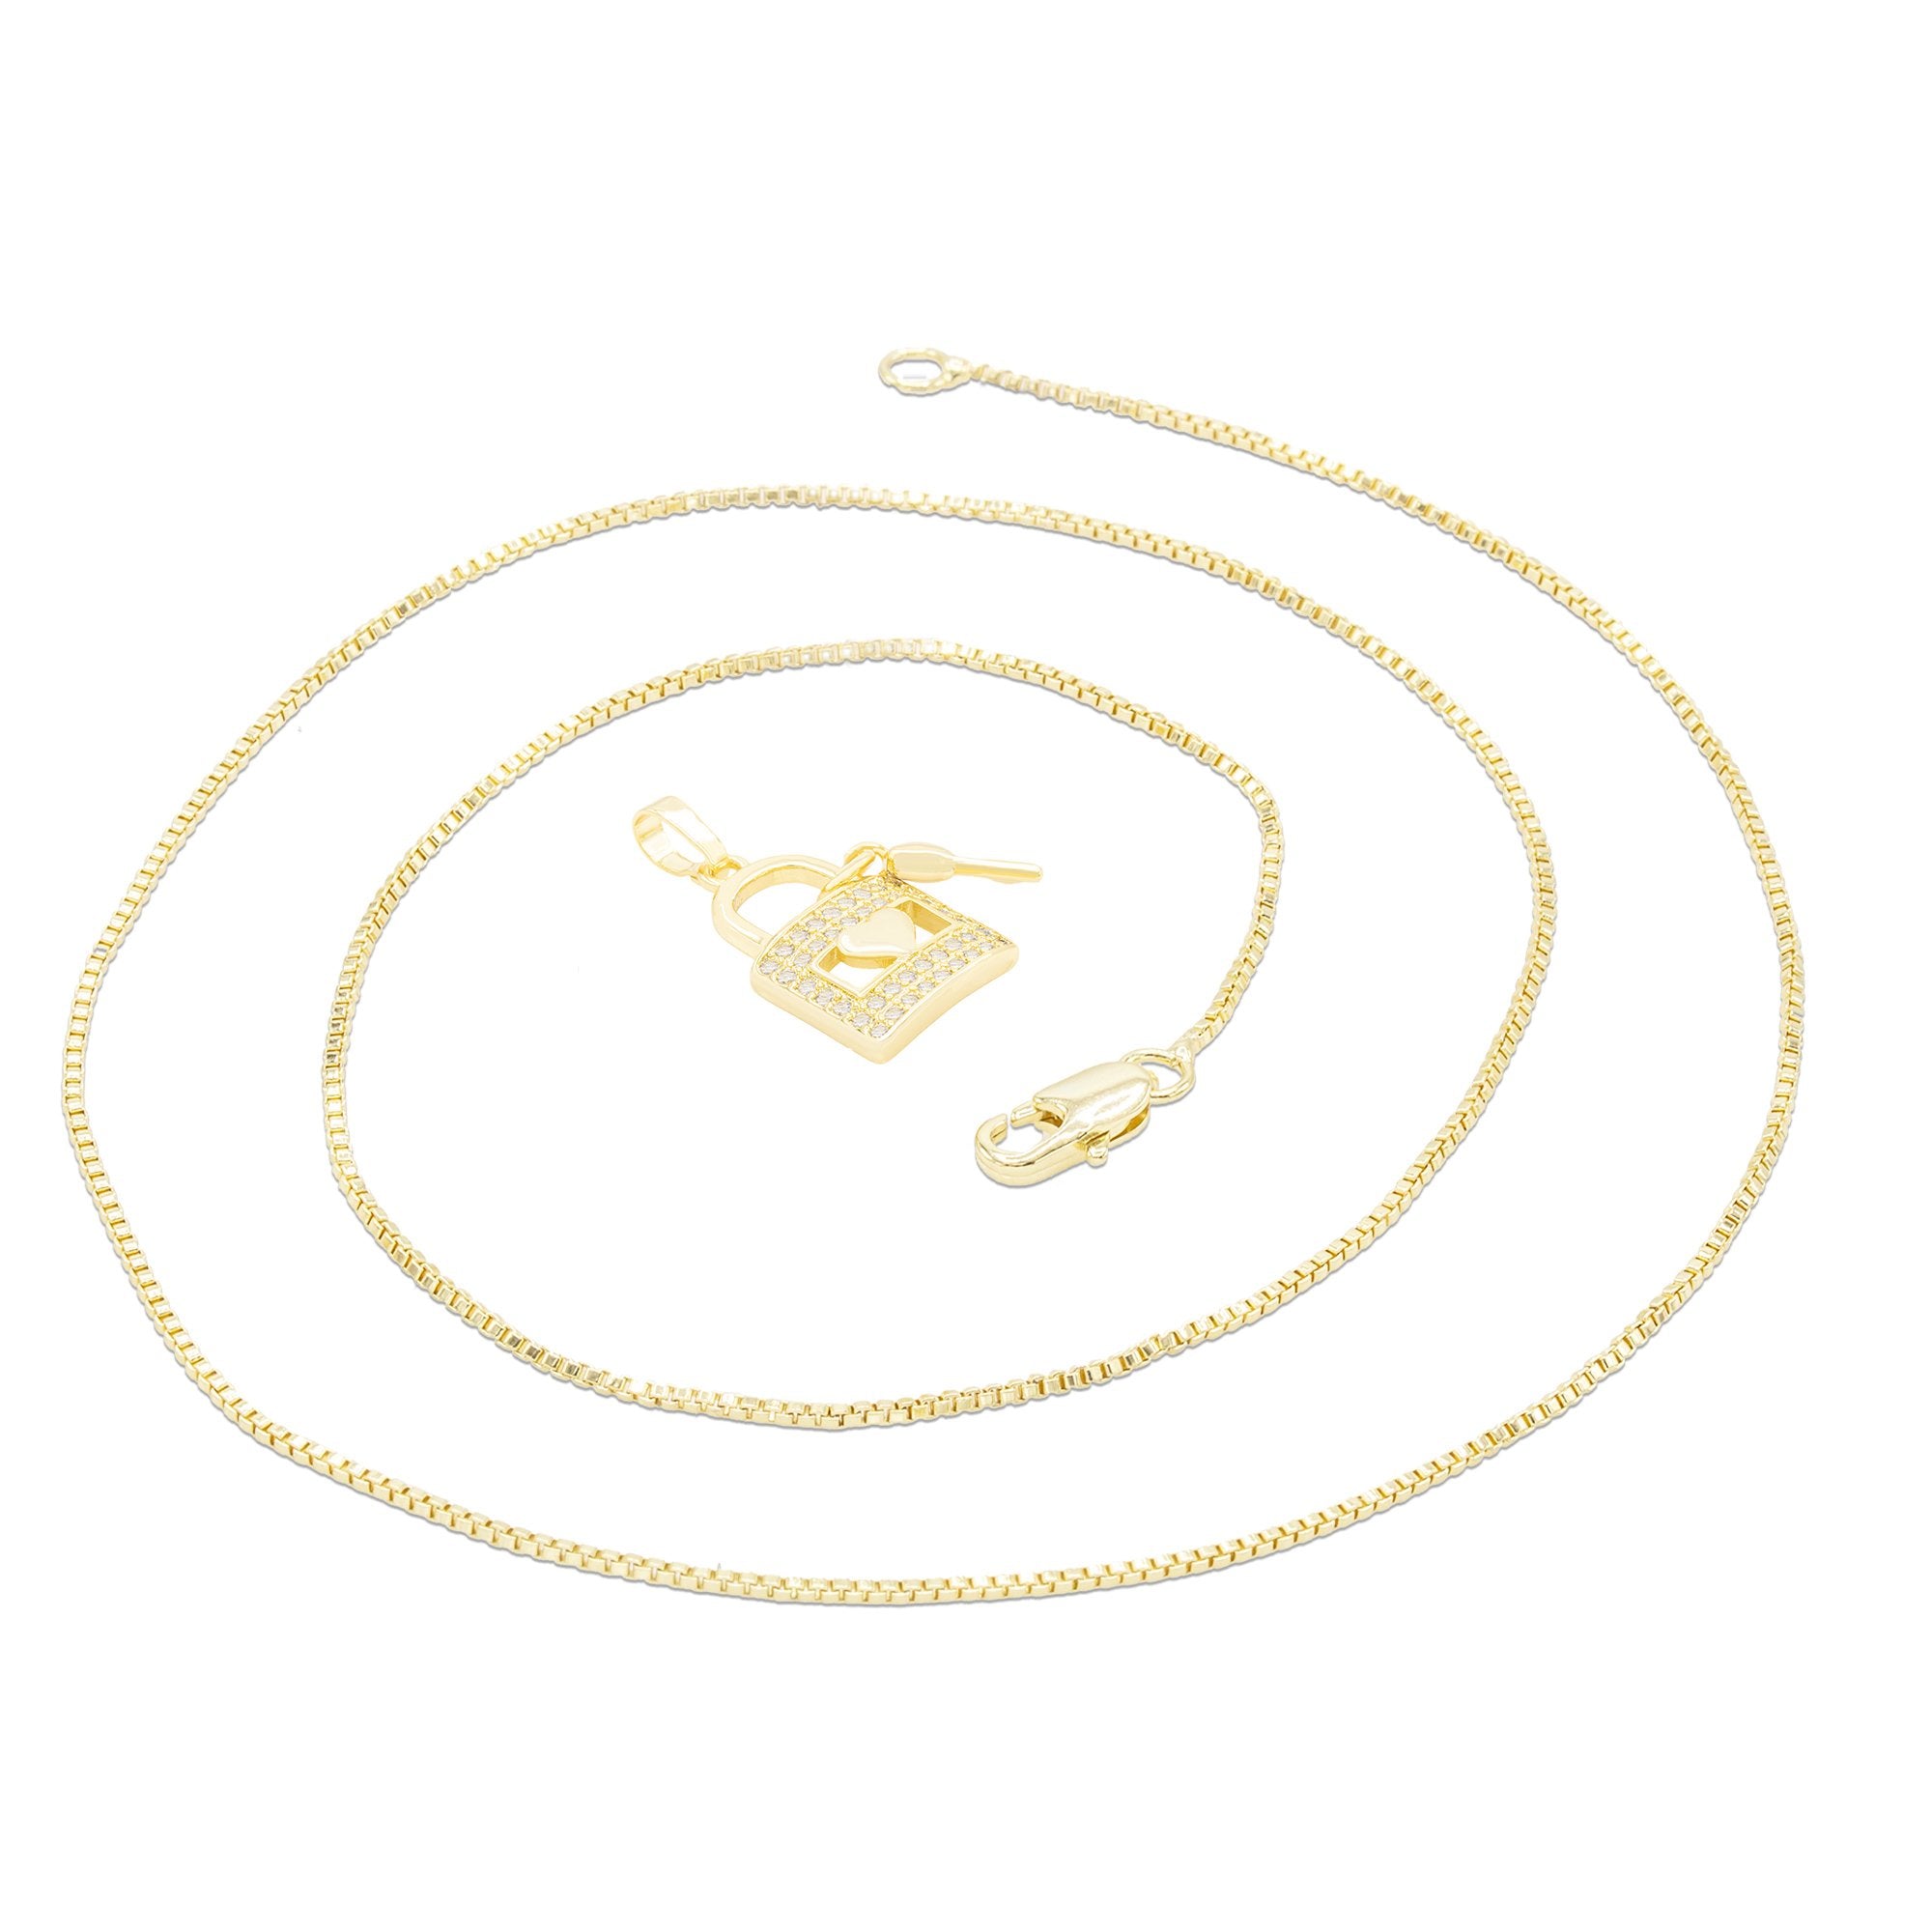 Cubic Zirconia 14K Gold Filled Lock Heart Key Pendant Necklace Set